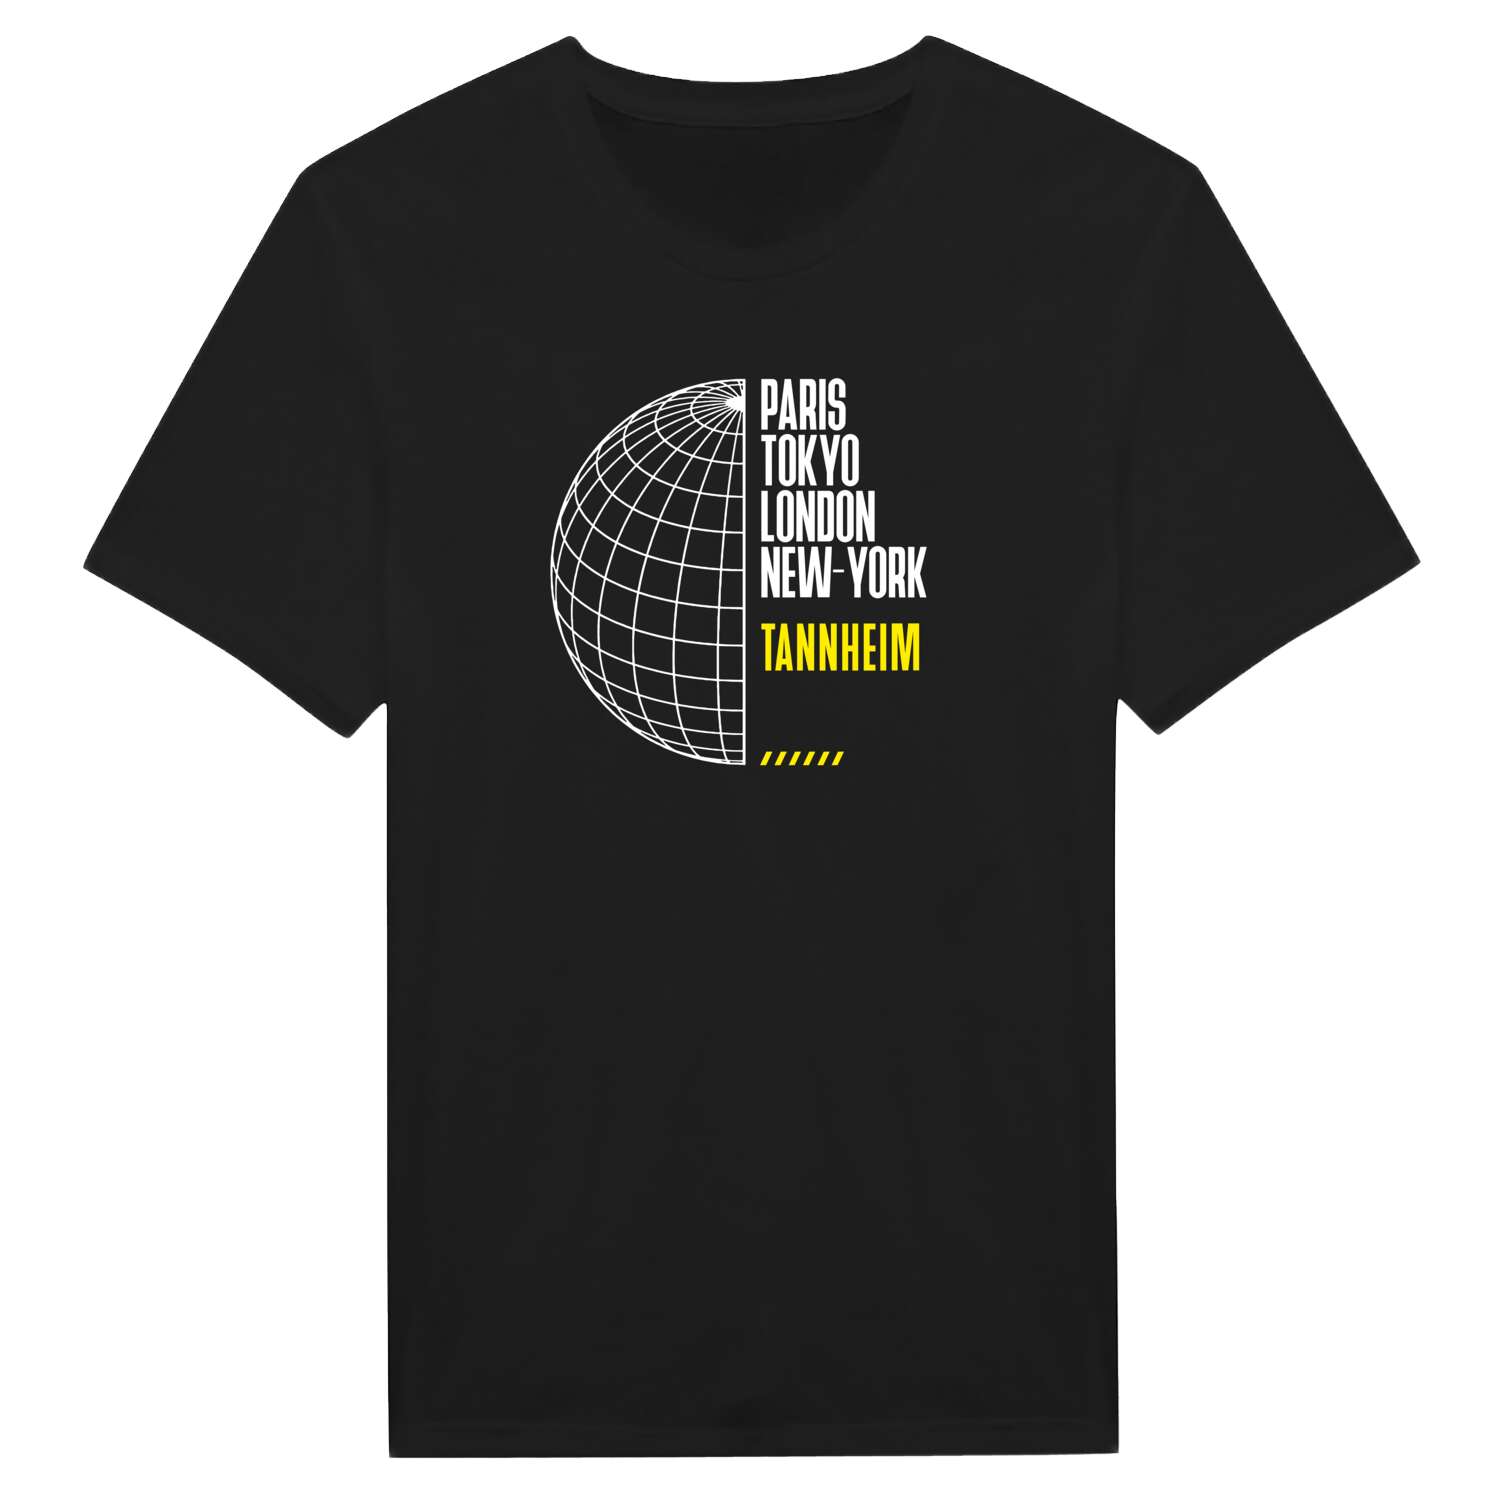 Tannheim T-Shirt »Paris Tokyo London«